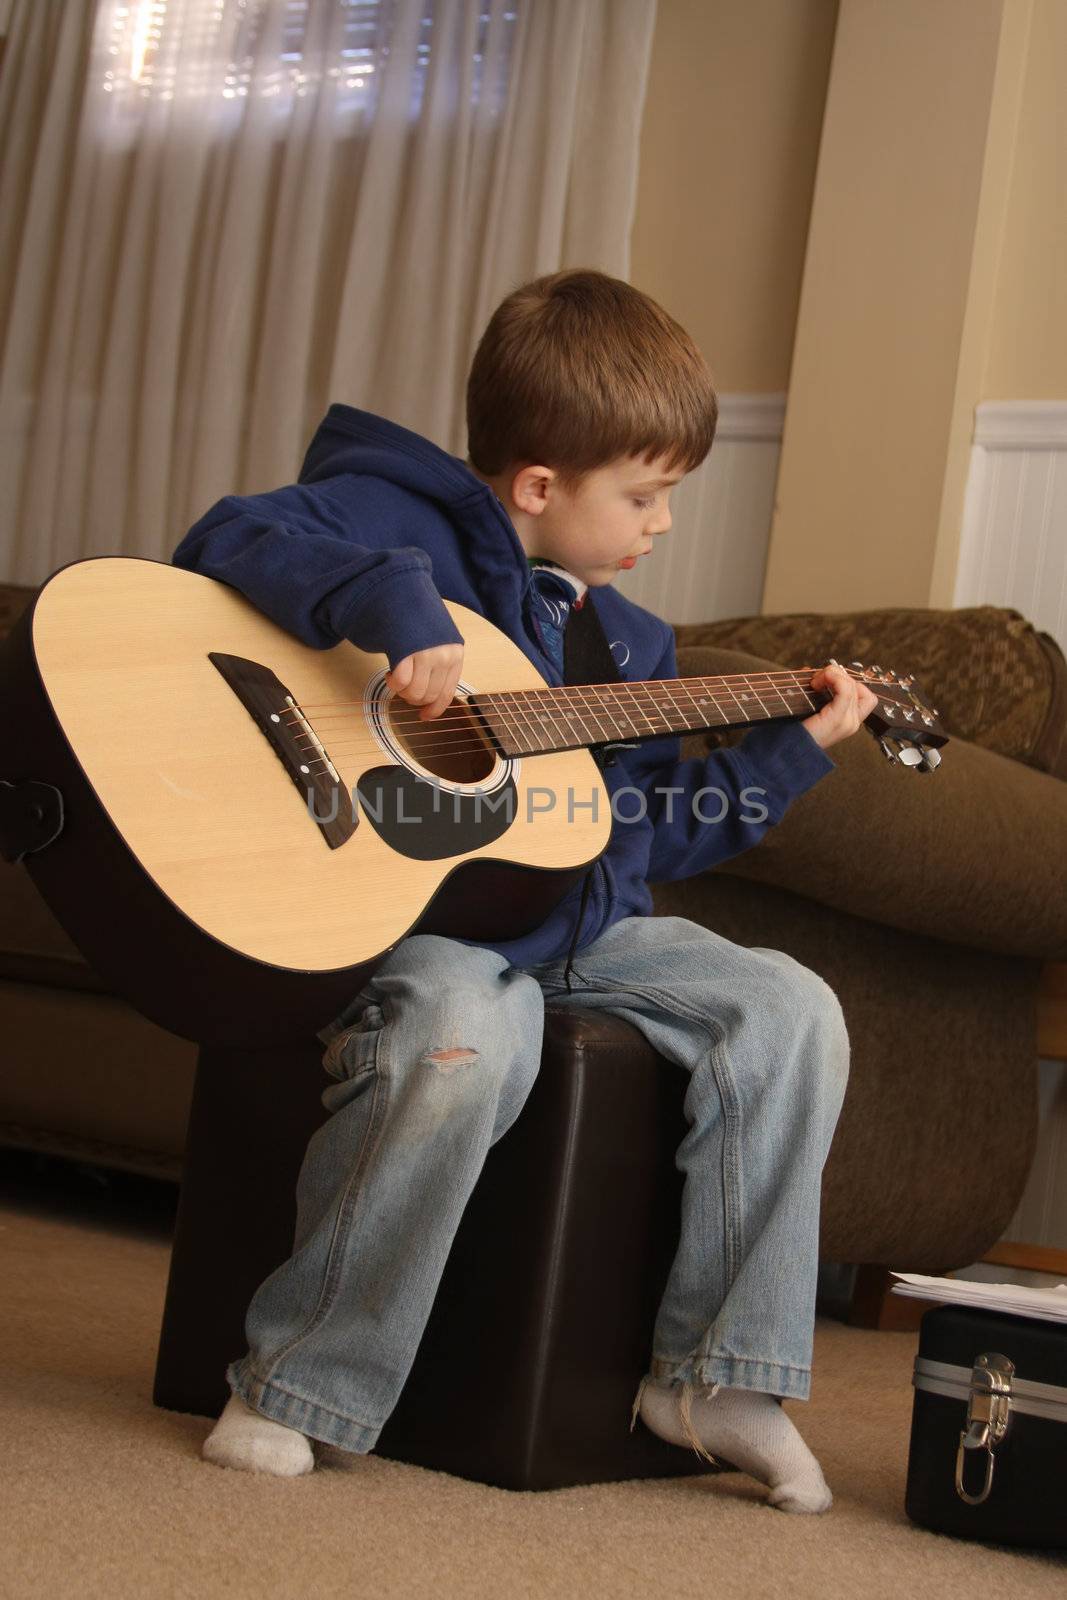 Guitar Playing Boy by pinkarmy25